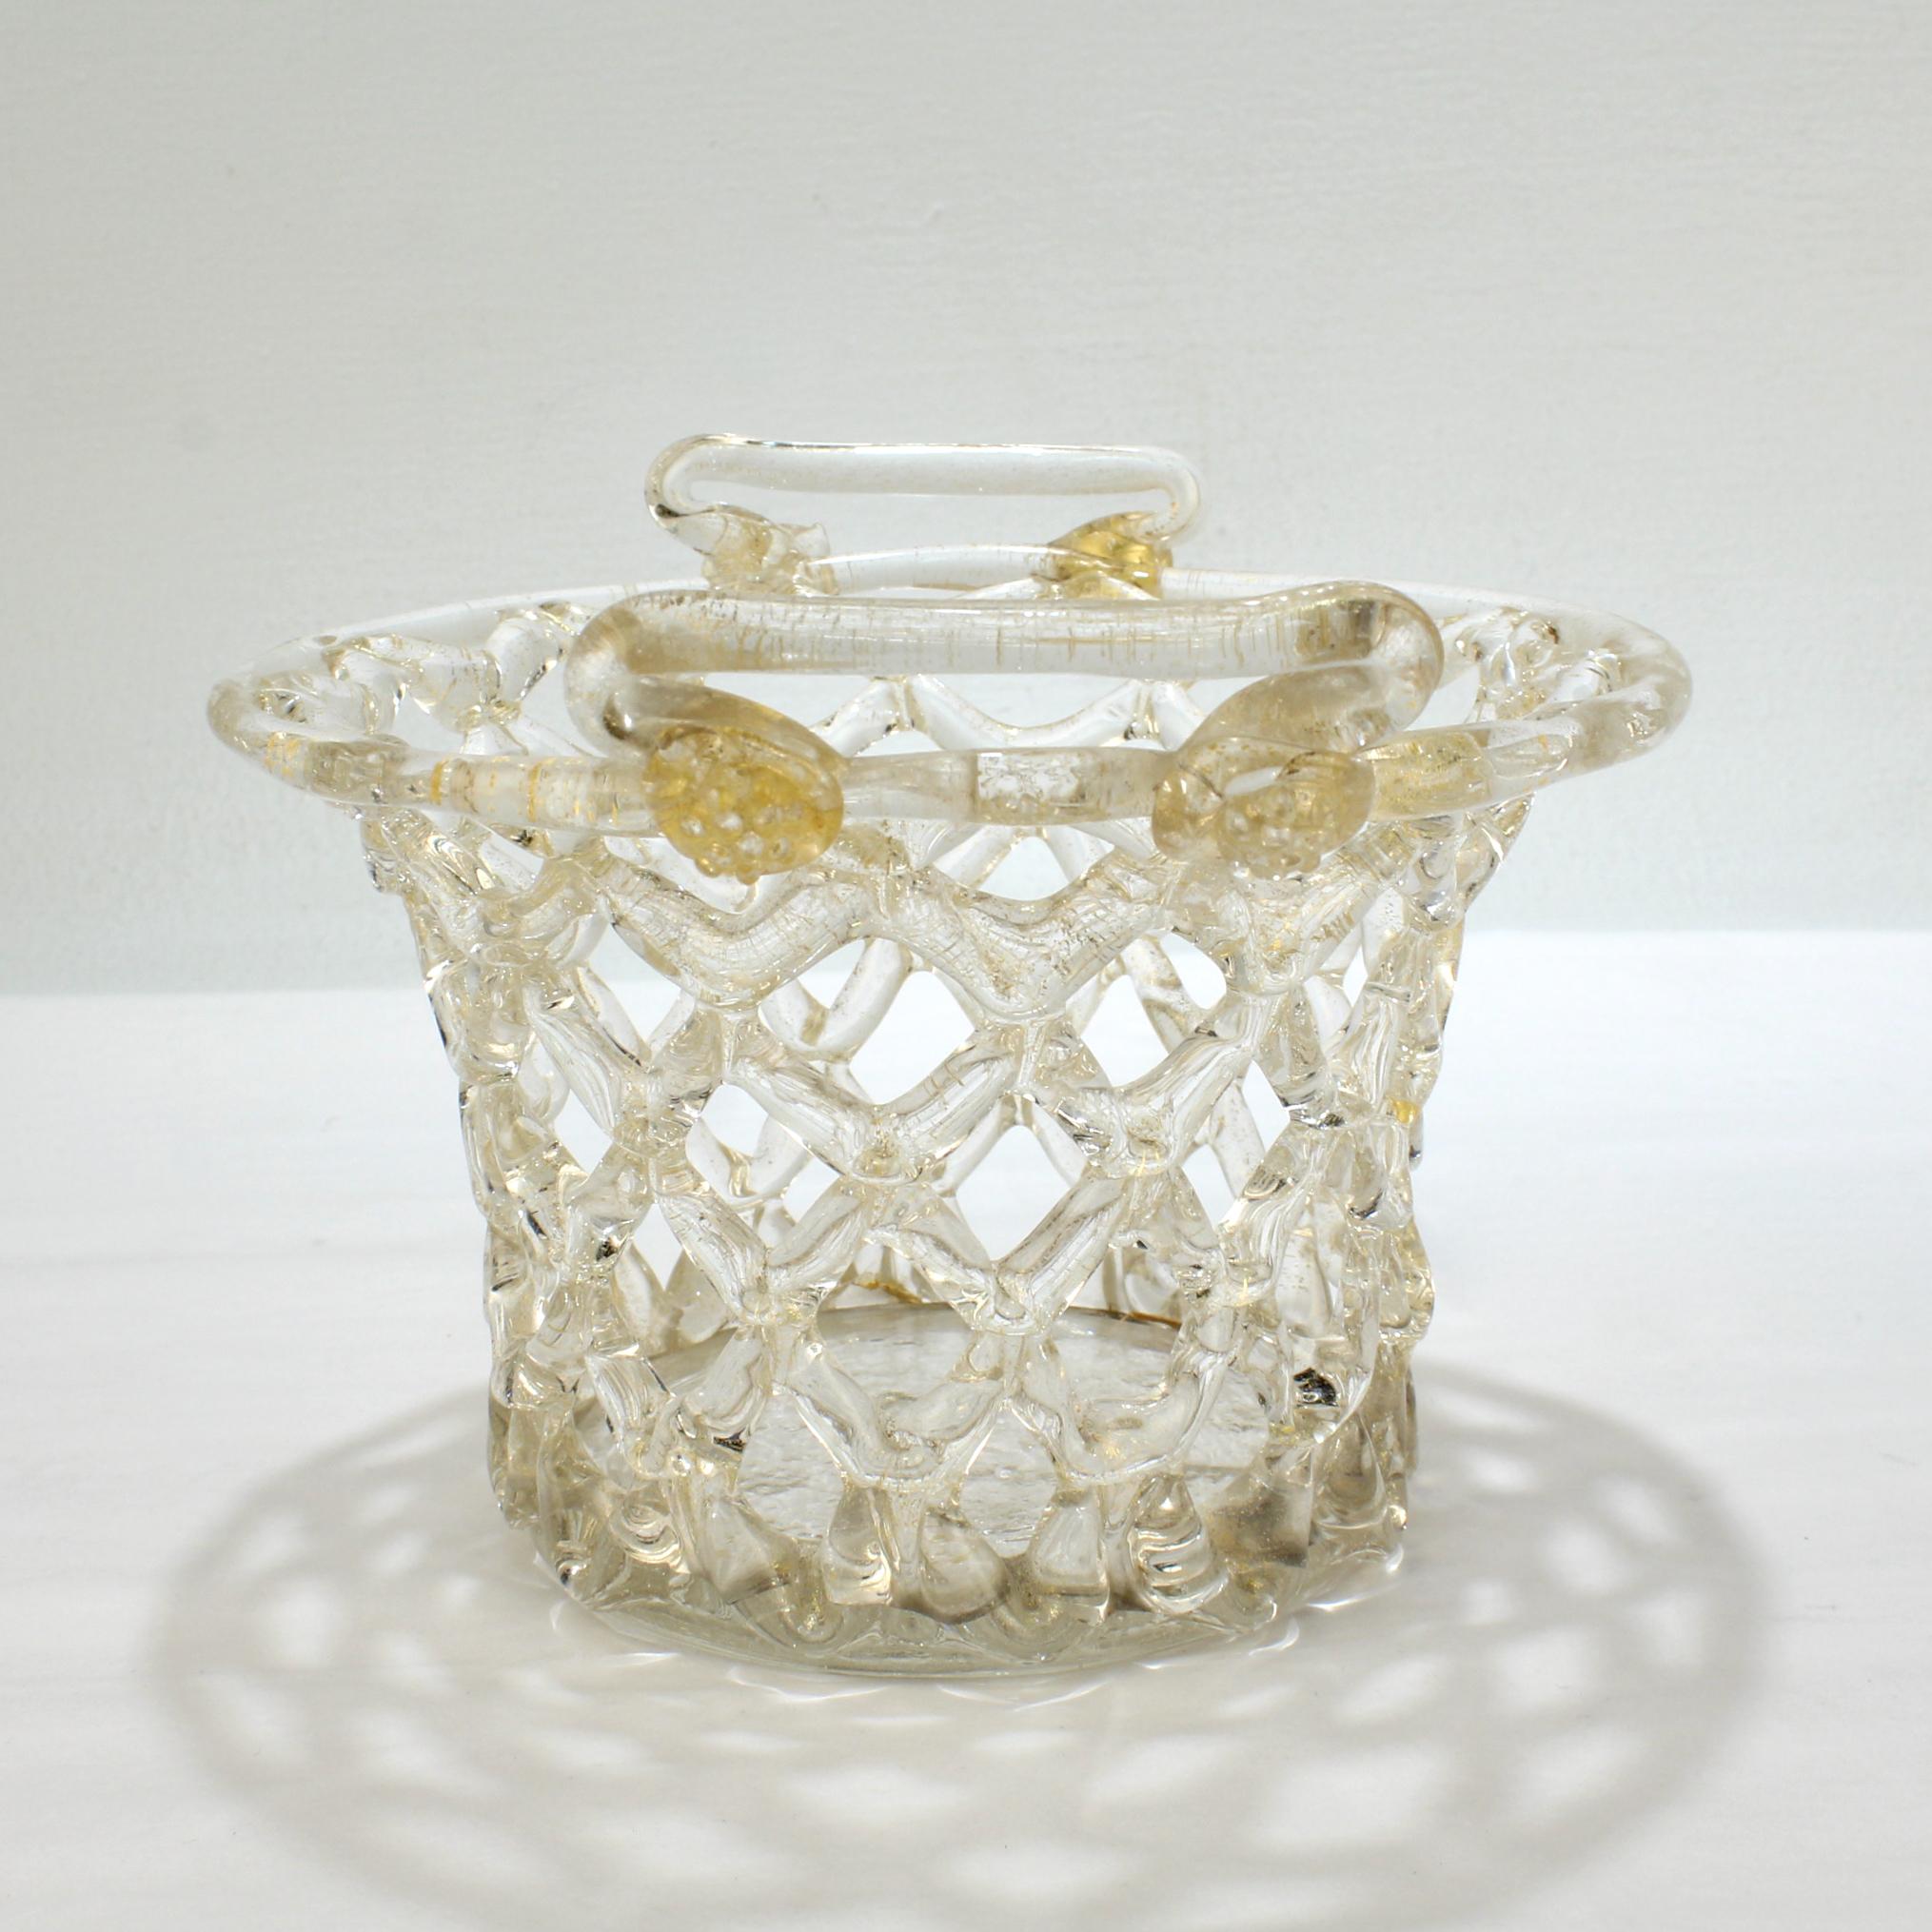 Renaissance Venetian or Murano Glass Liege a Traforato Openwork Basket with Gold Foil